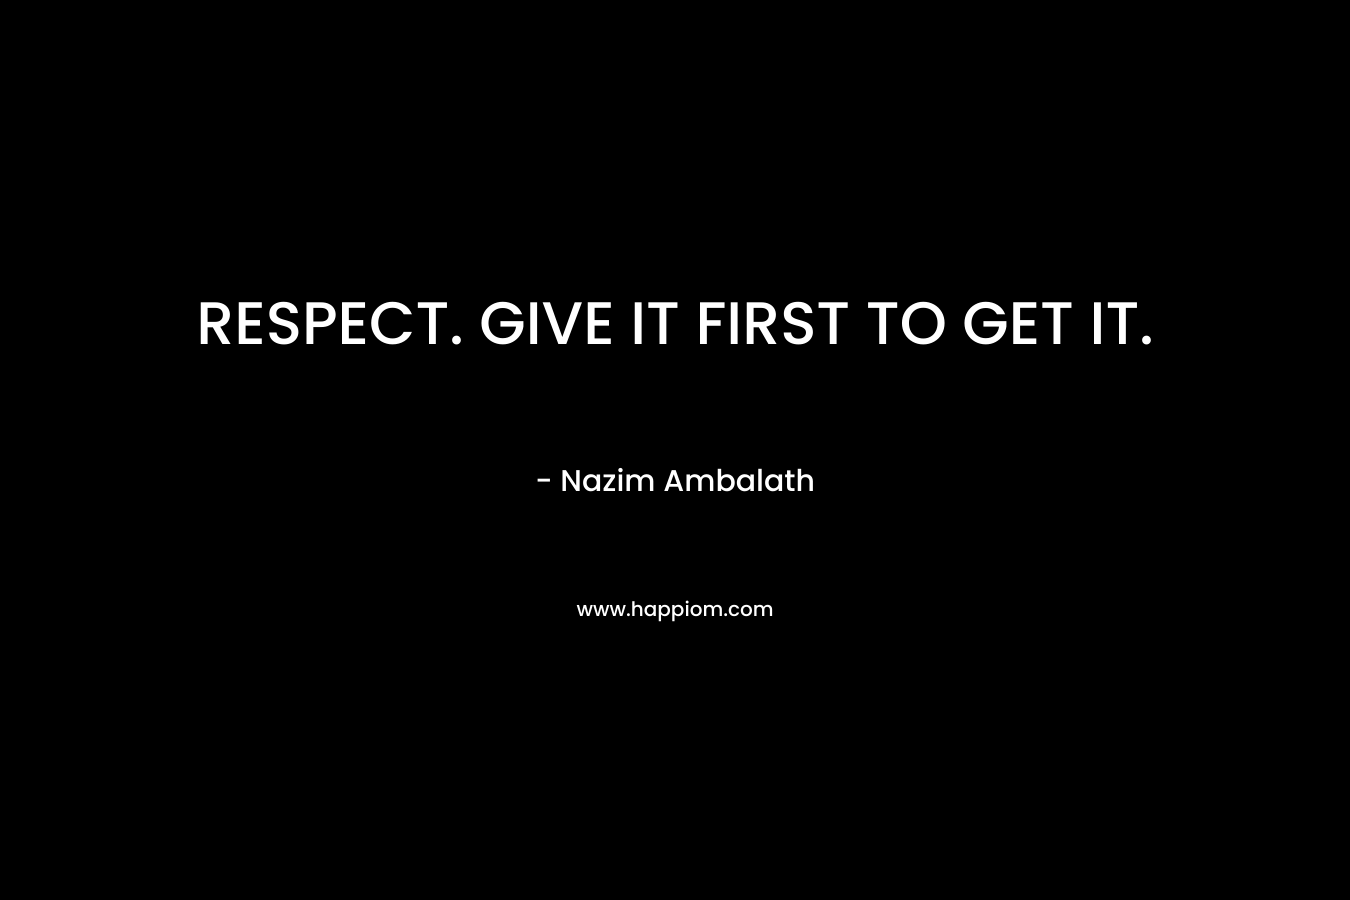 RESPECT. GIVE IT FIRST TO GET IT. – Nazim Ambalath